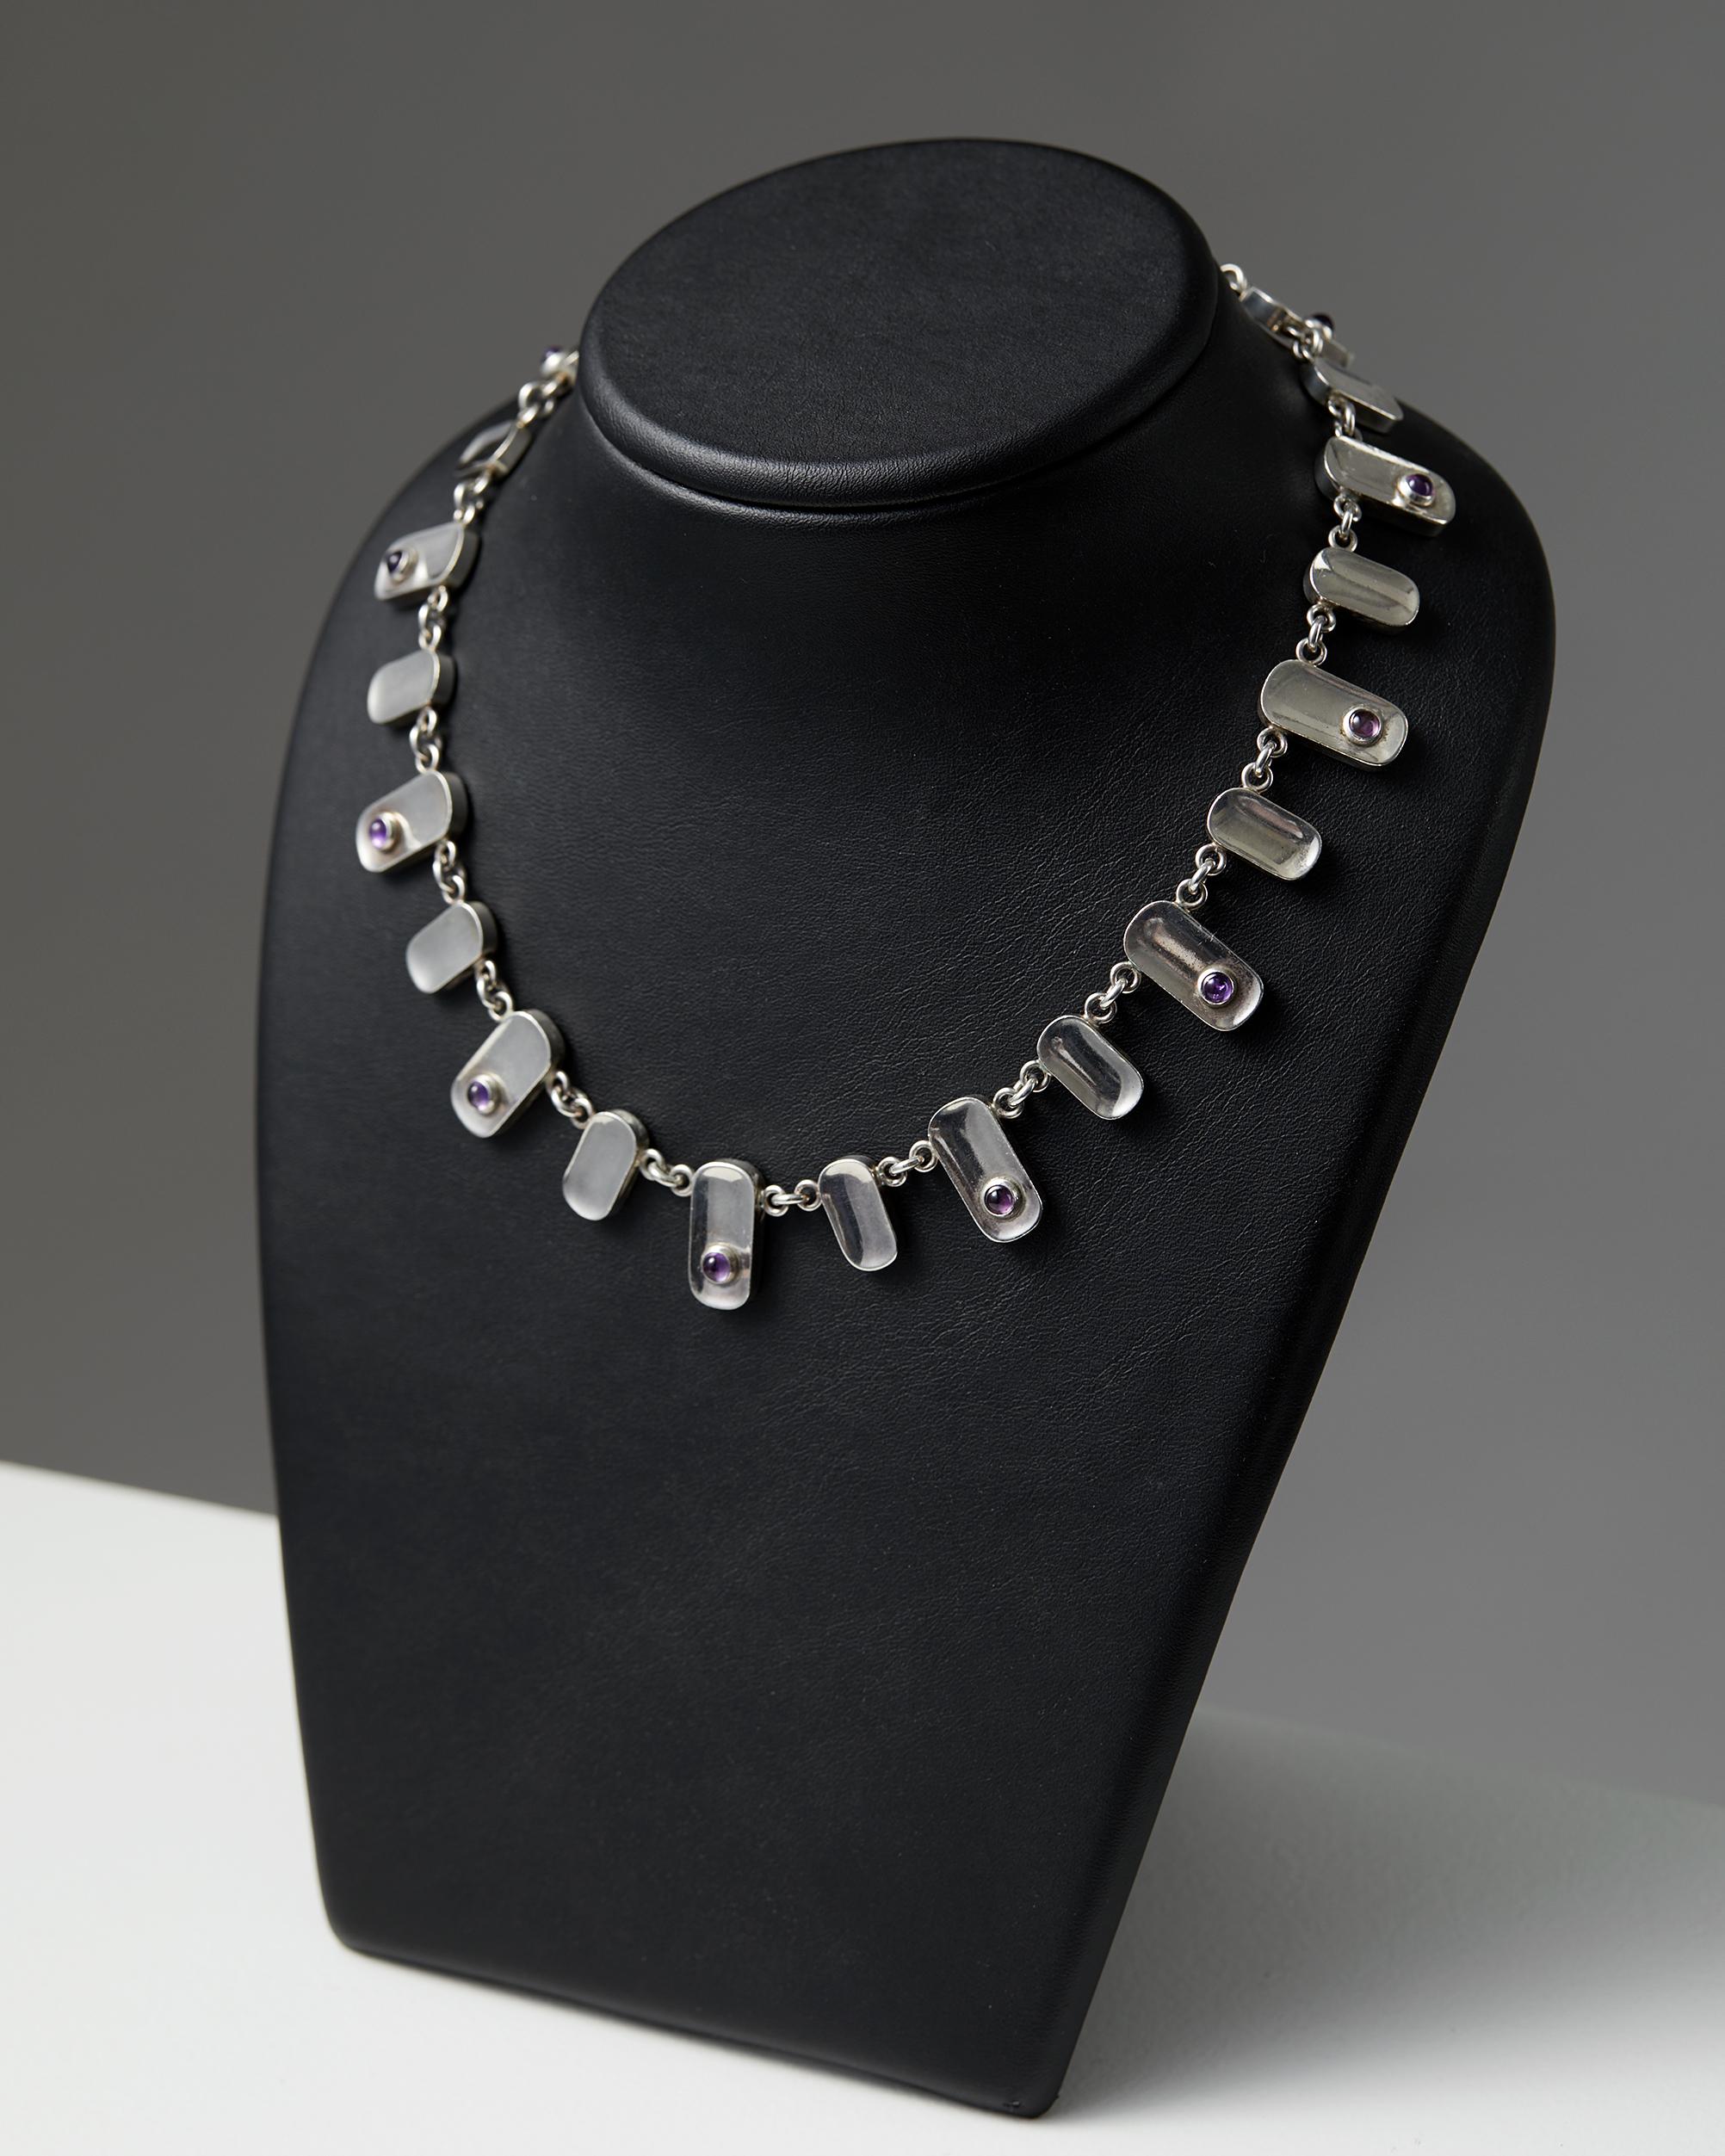 Modern Necklace, Designed by Aarvo Saarela, Finland, 1965